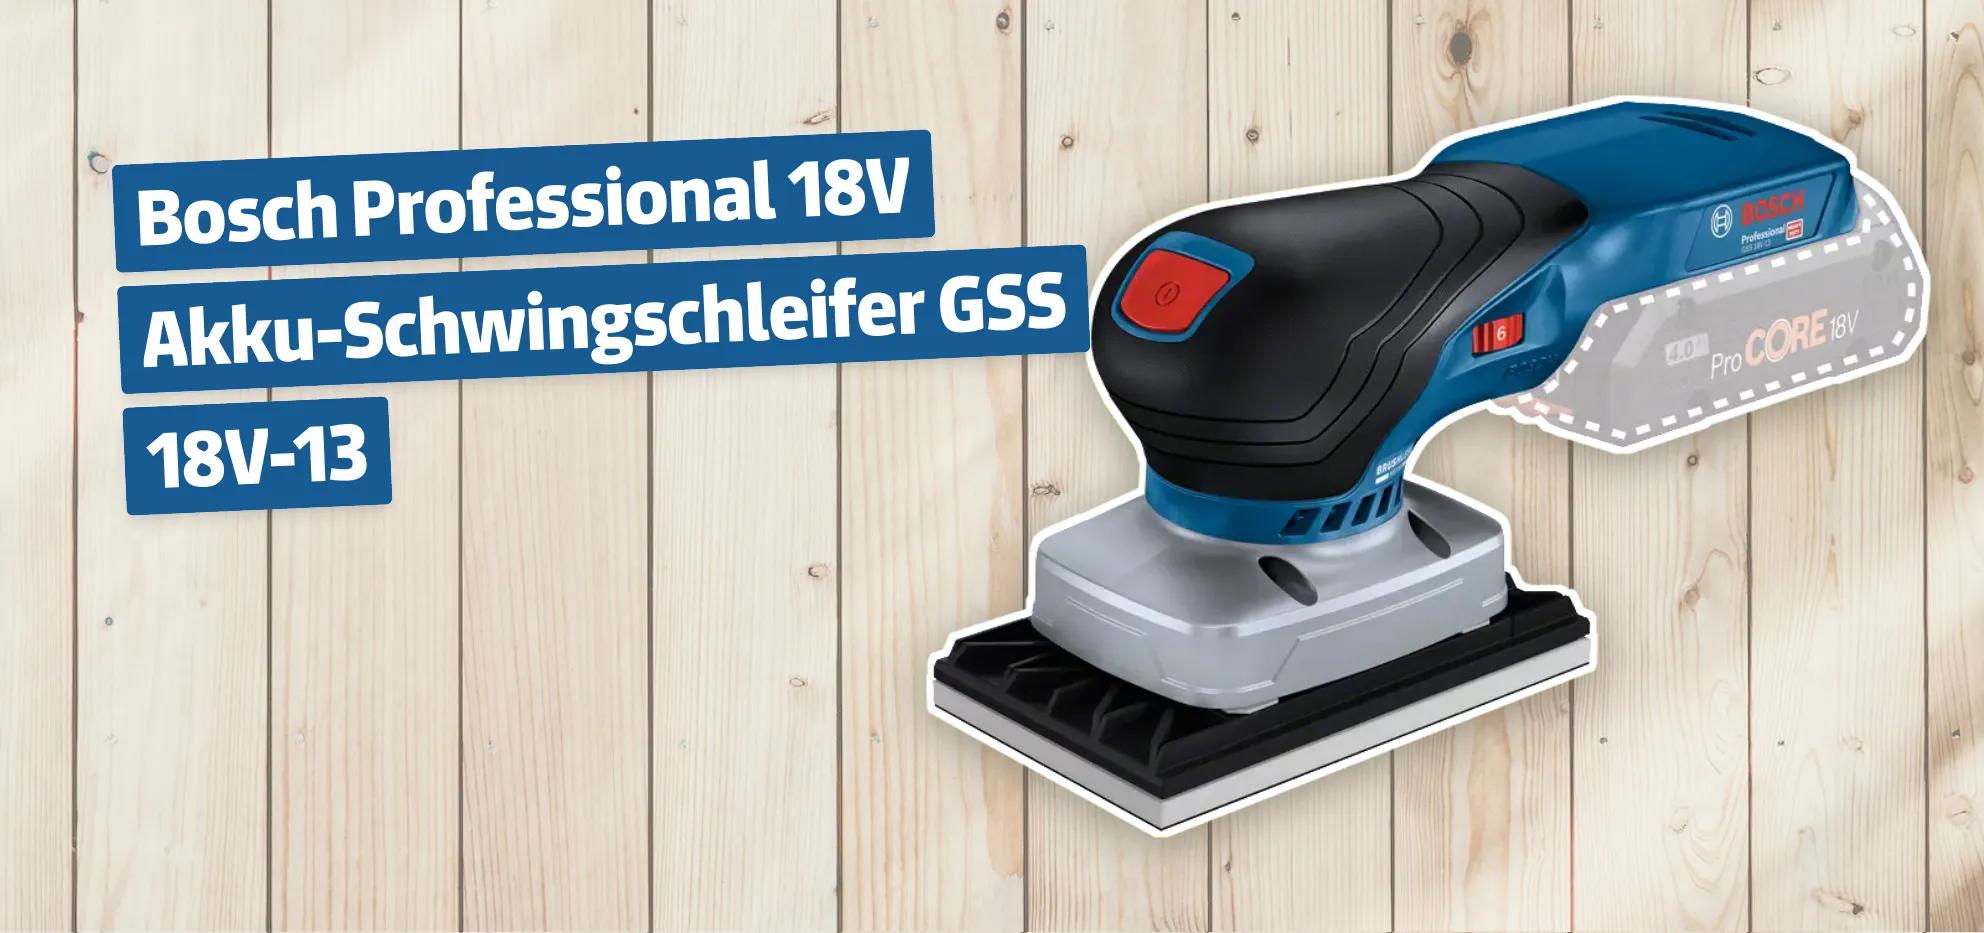 Bosch Professional 18V Akku-Schwingschleifer GSS 18V-13